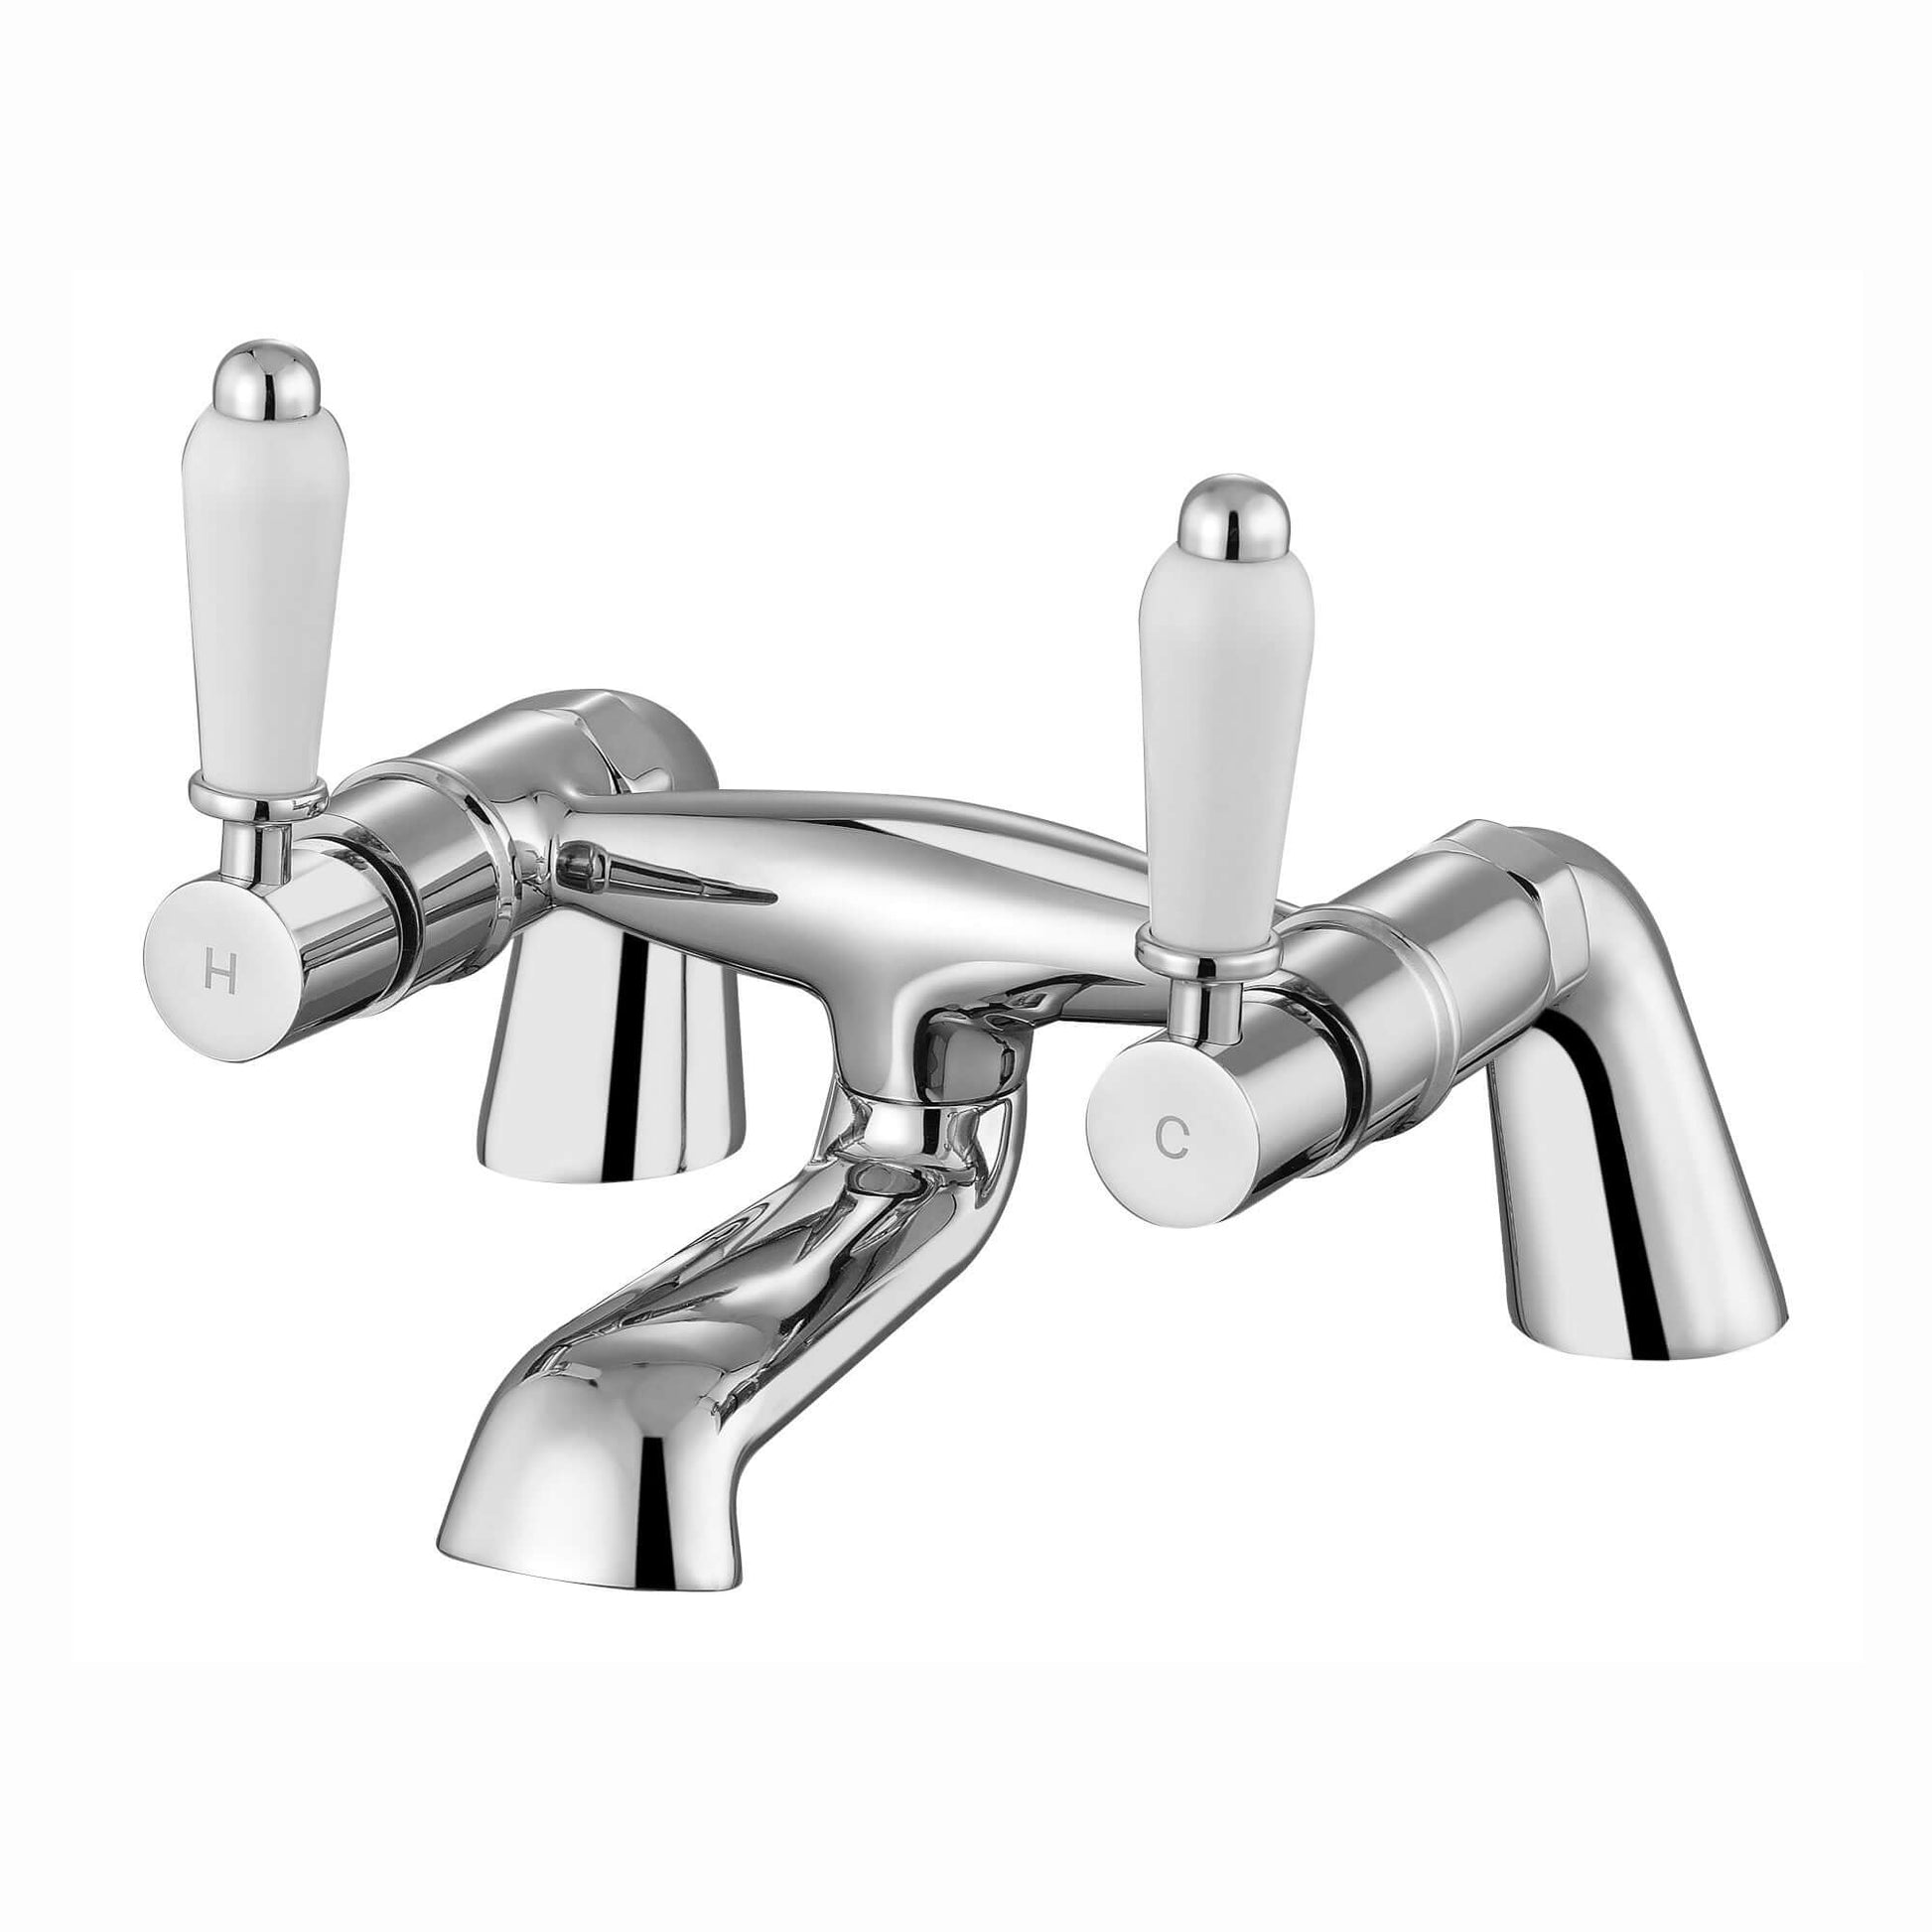 Downton bath mixer tap with white ceramic levers - chrome - Taps